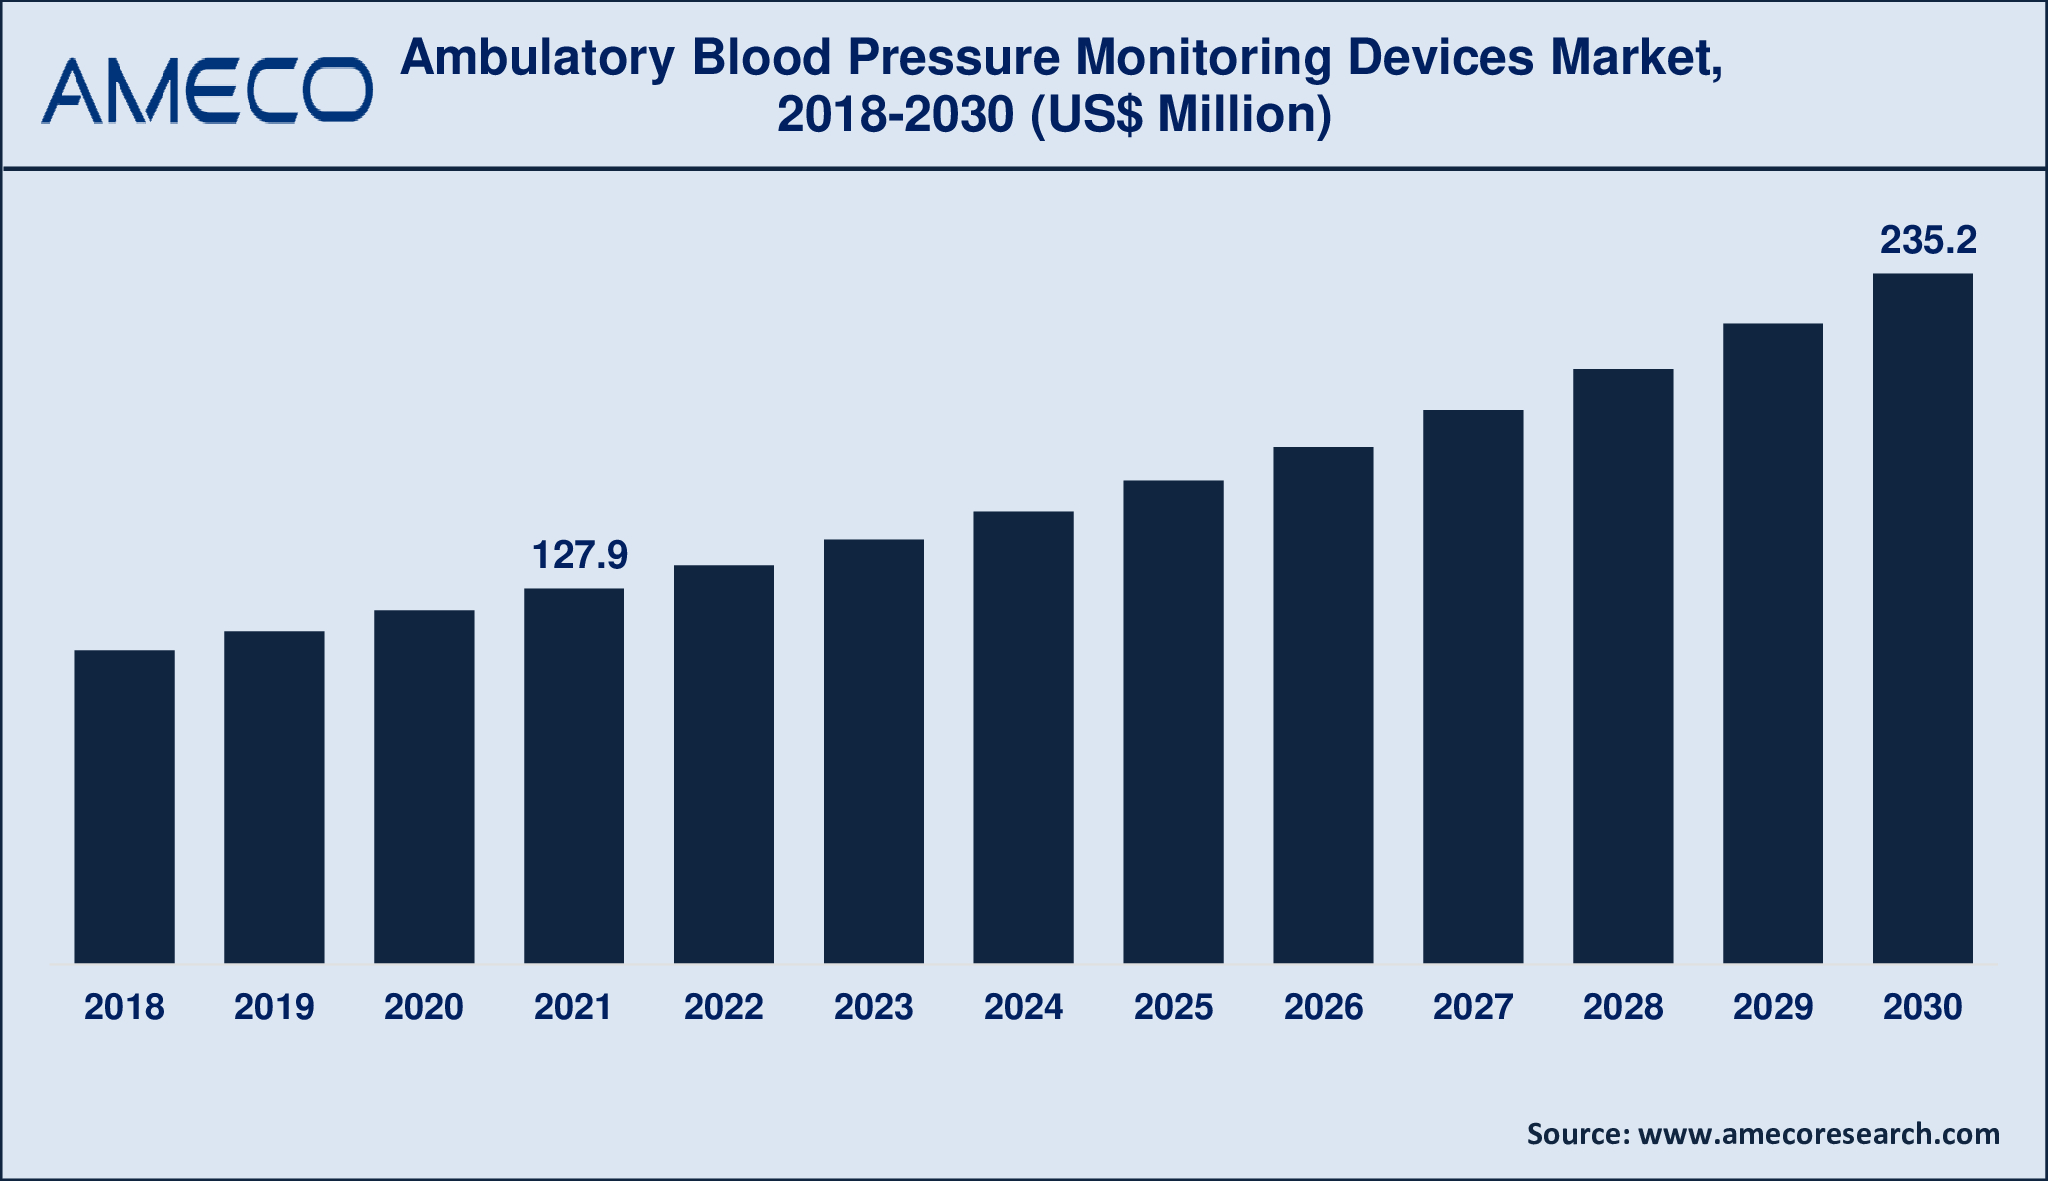 Ambulatory Blood Pressure Monitoring Devices Market Dynamics